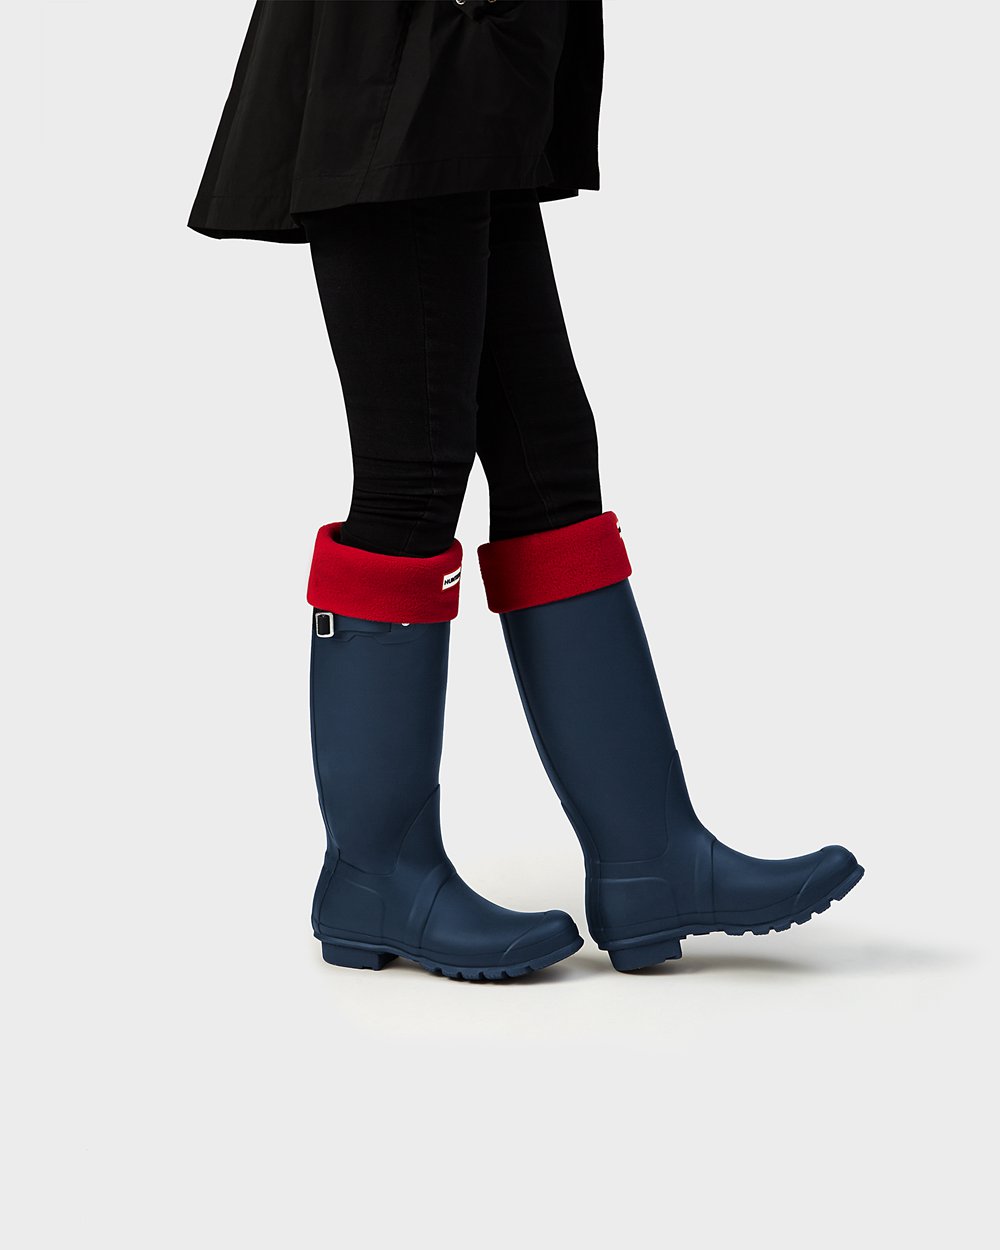 Womens Tall Rain Boots - Hunter Original (82AUYFOVJ) - Navy